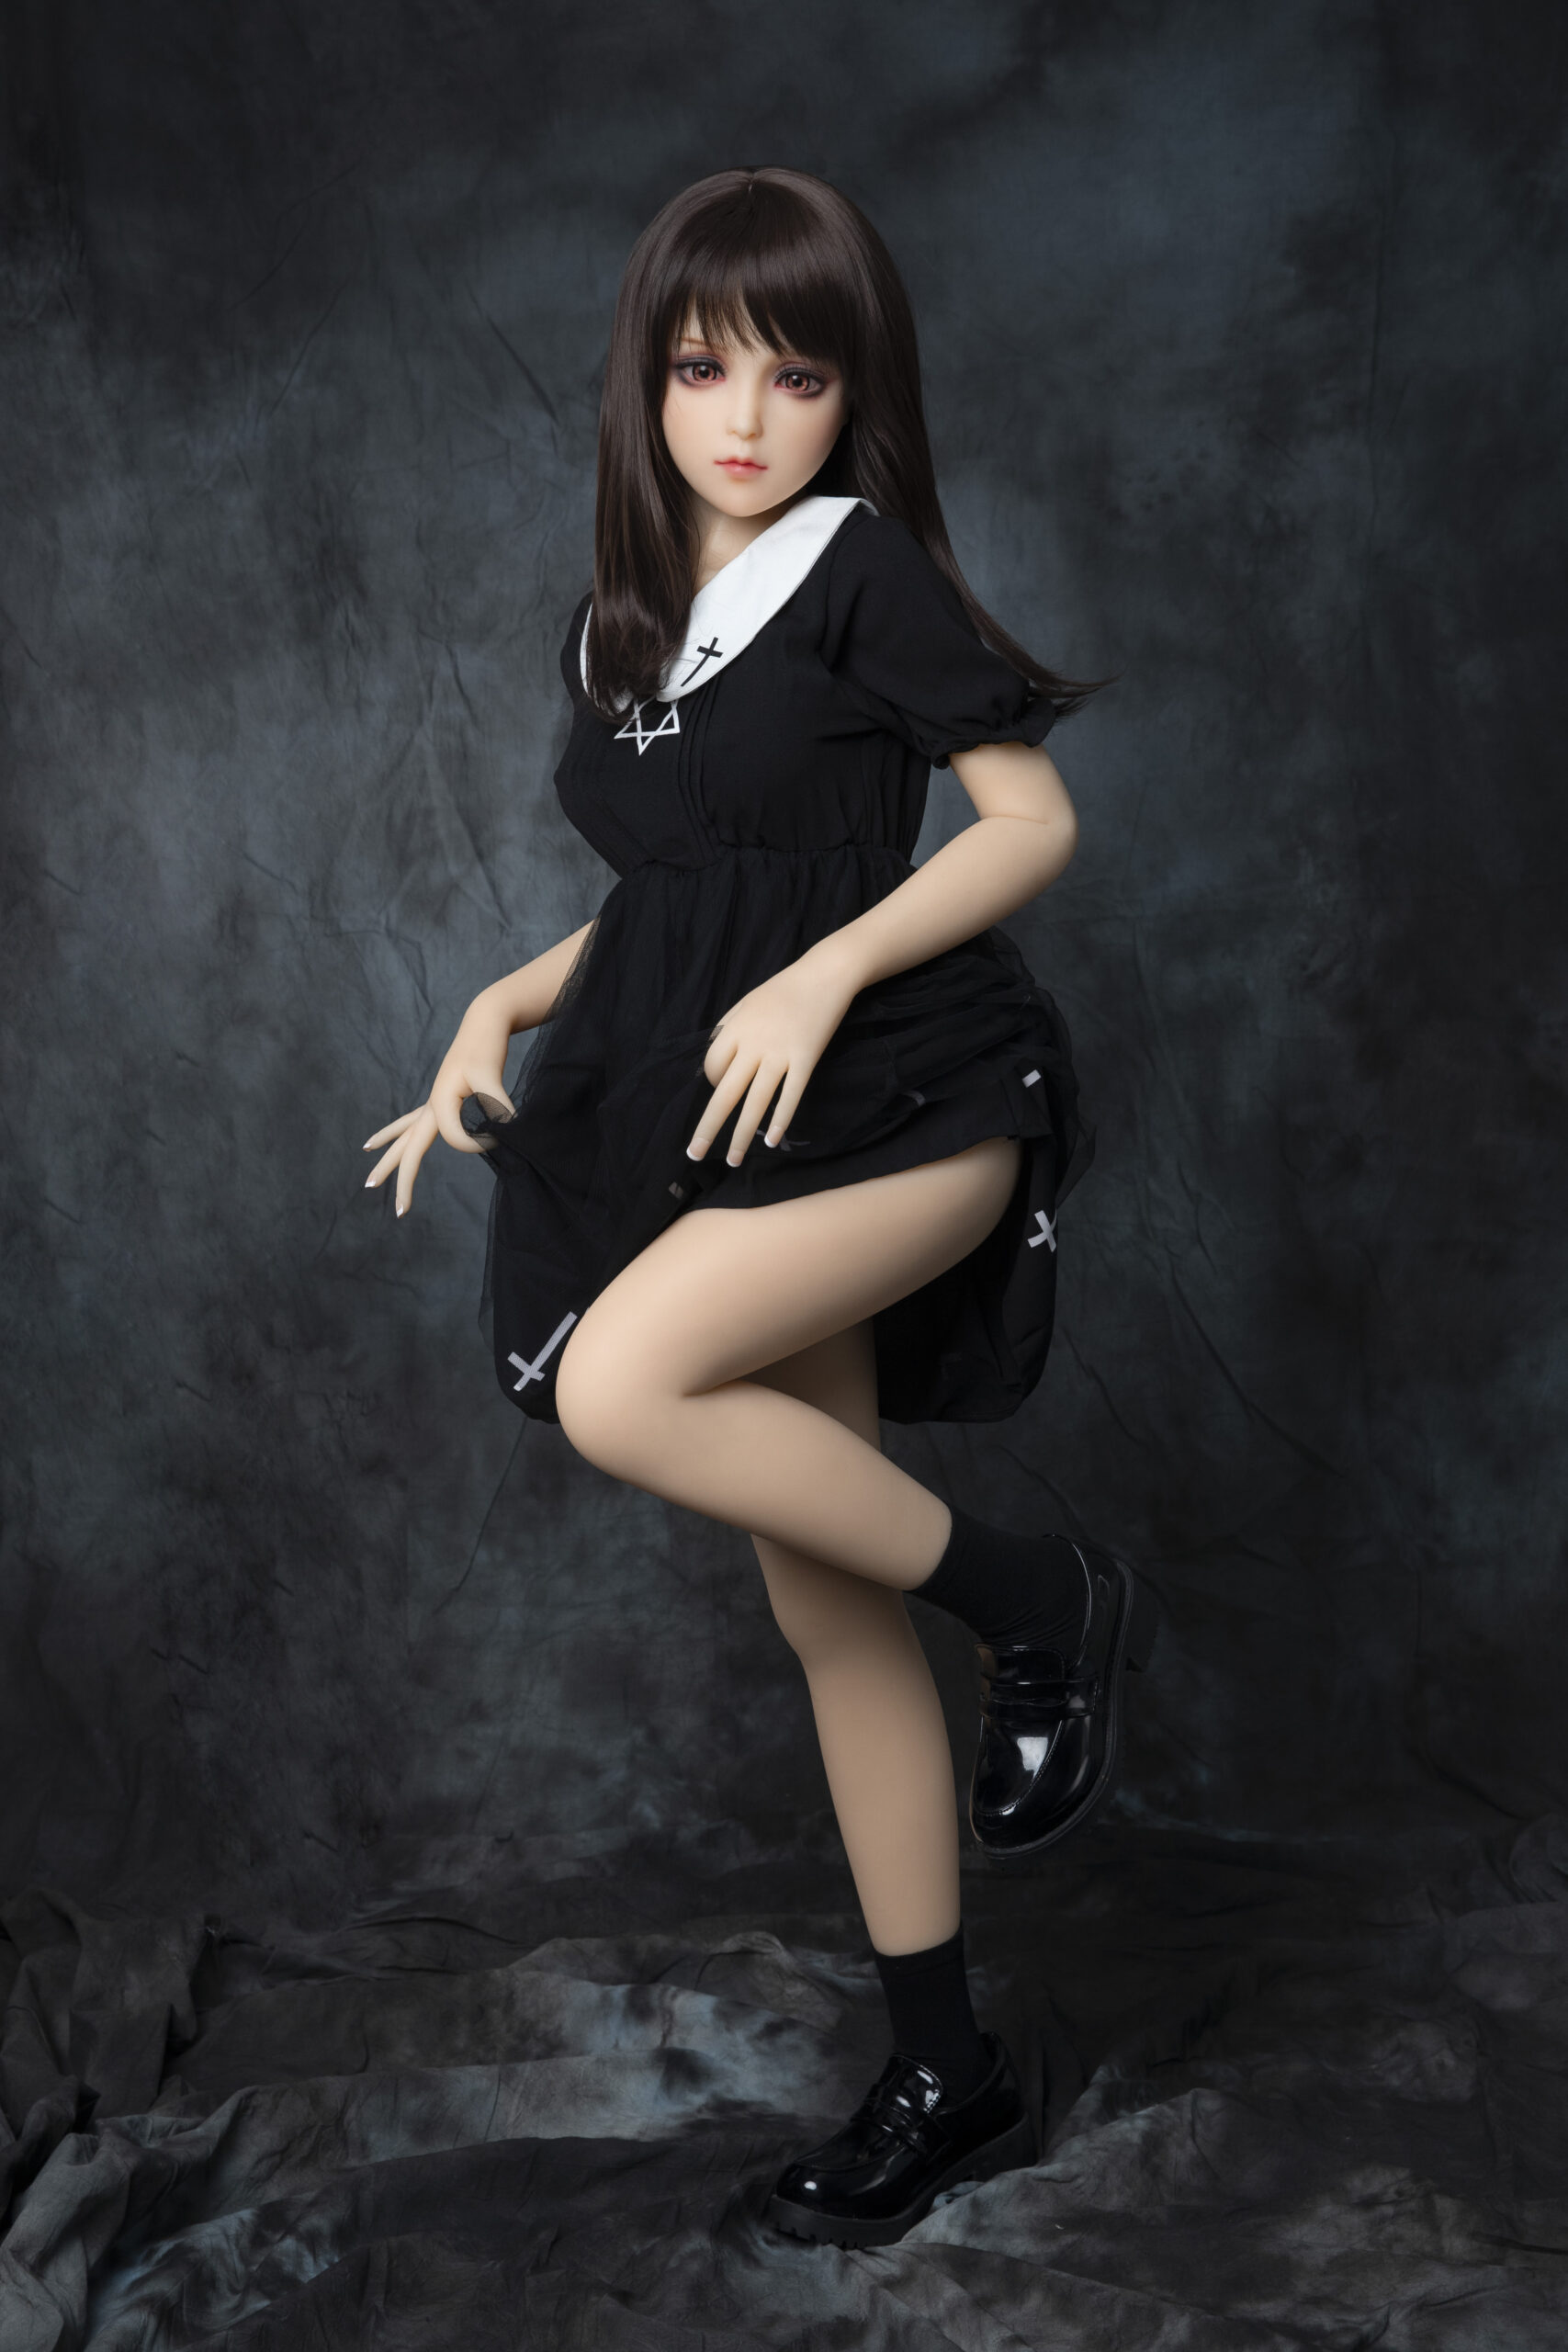 Best Japanese Anime Looking Cute 140cm Lifelike Axb Doll Acsexdolls